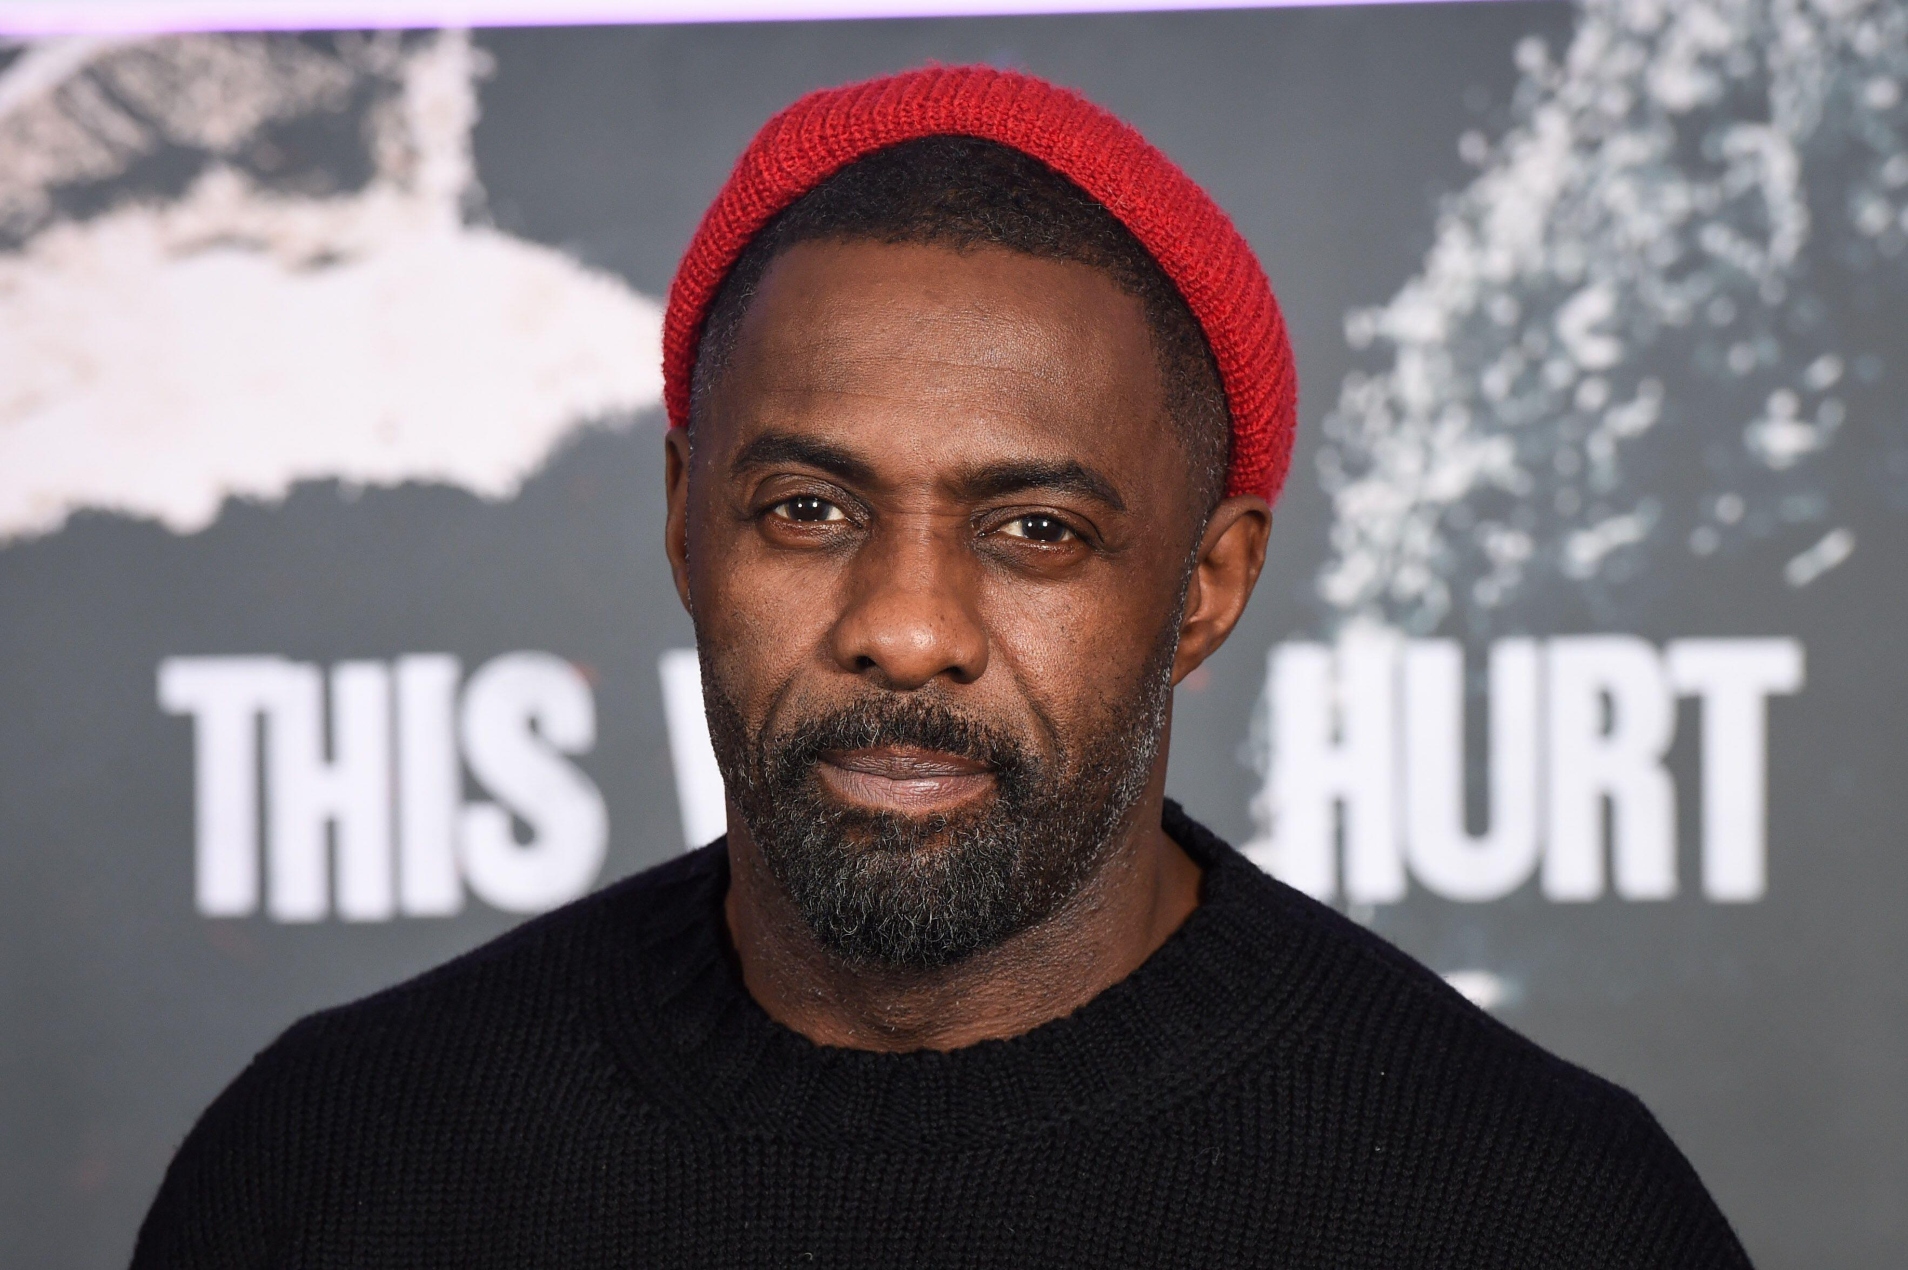 Idris Elba recounts ordeal of being held at gunpoint